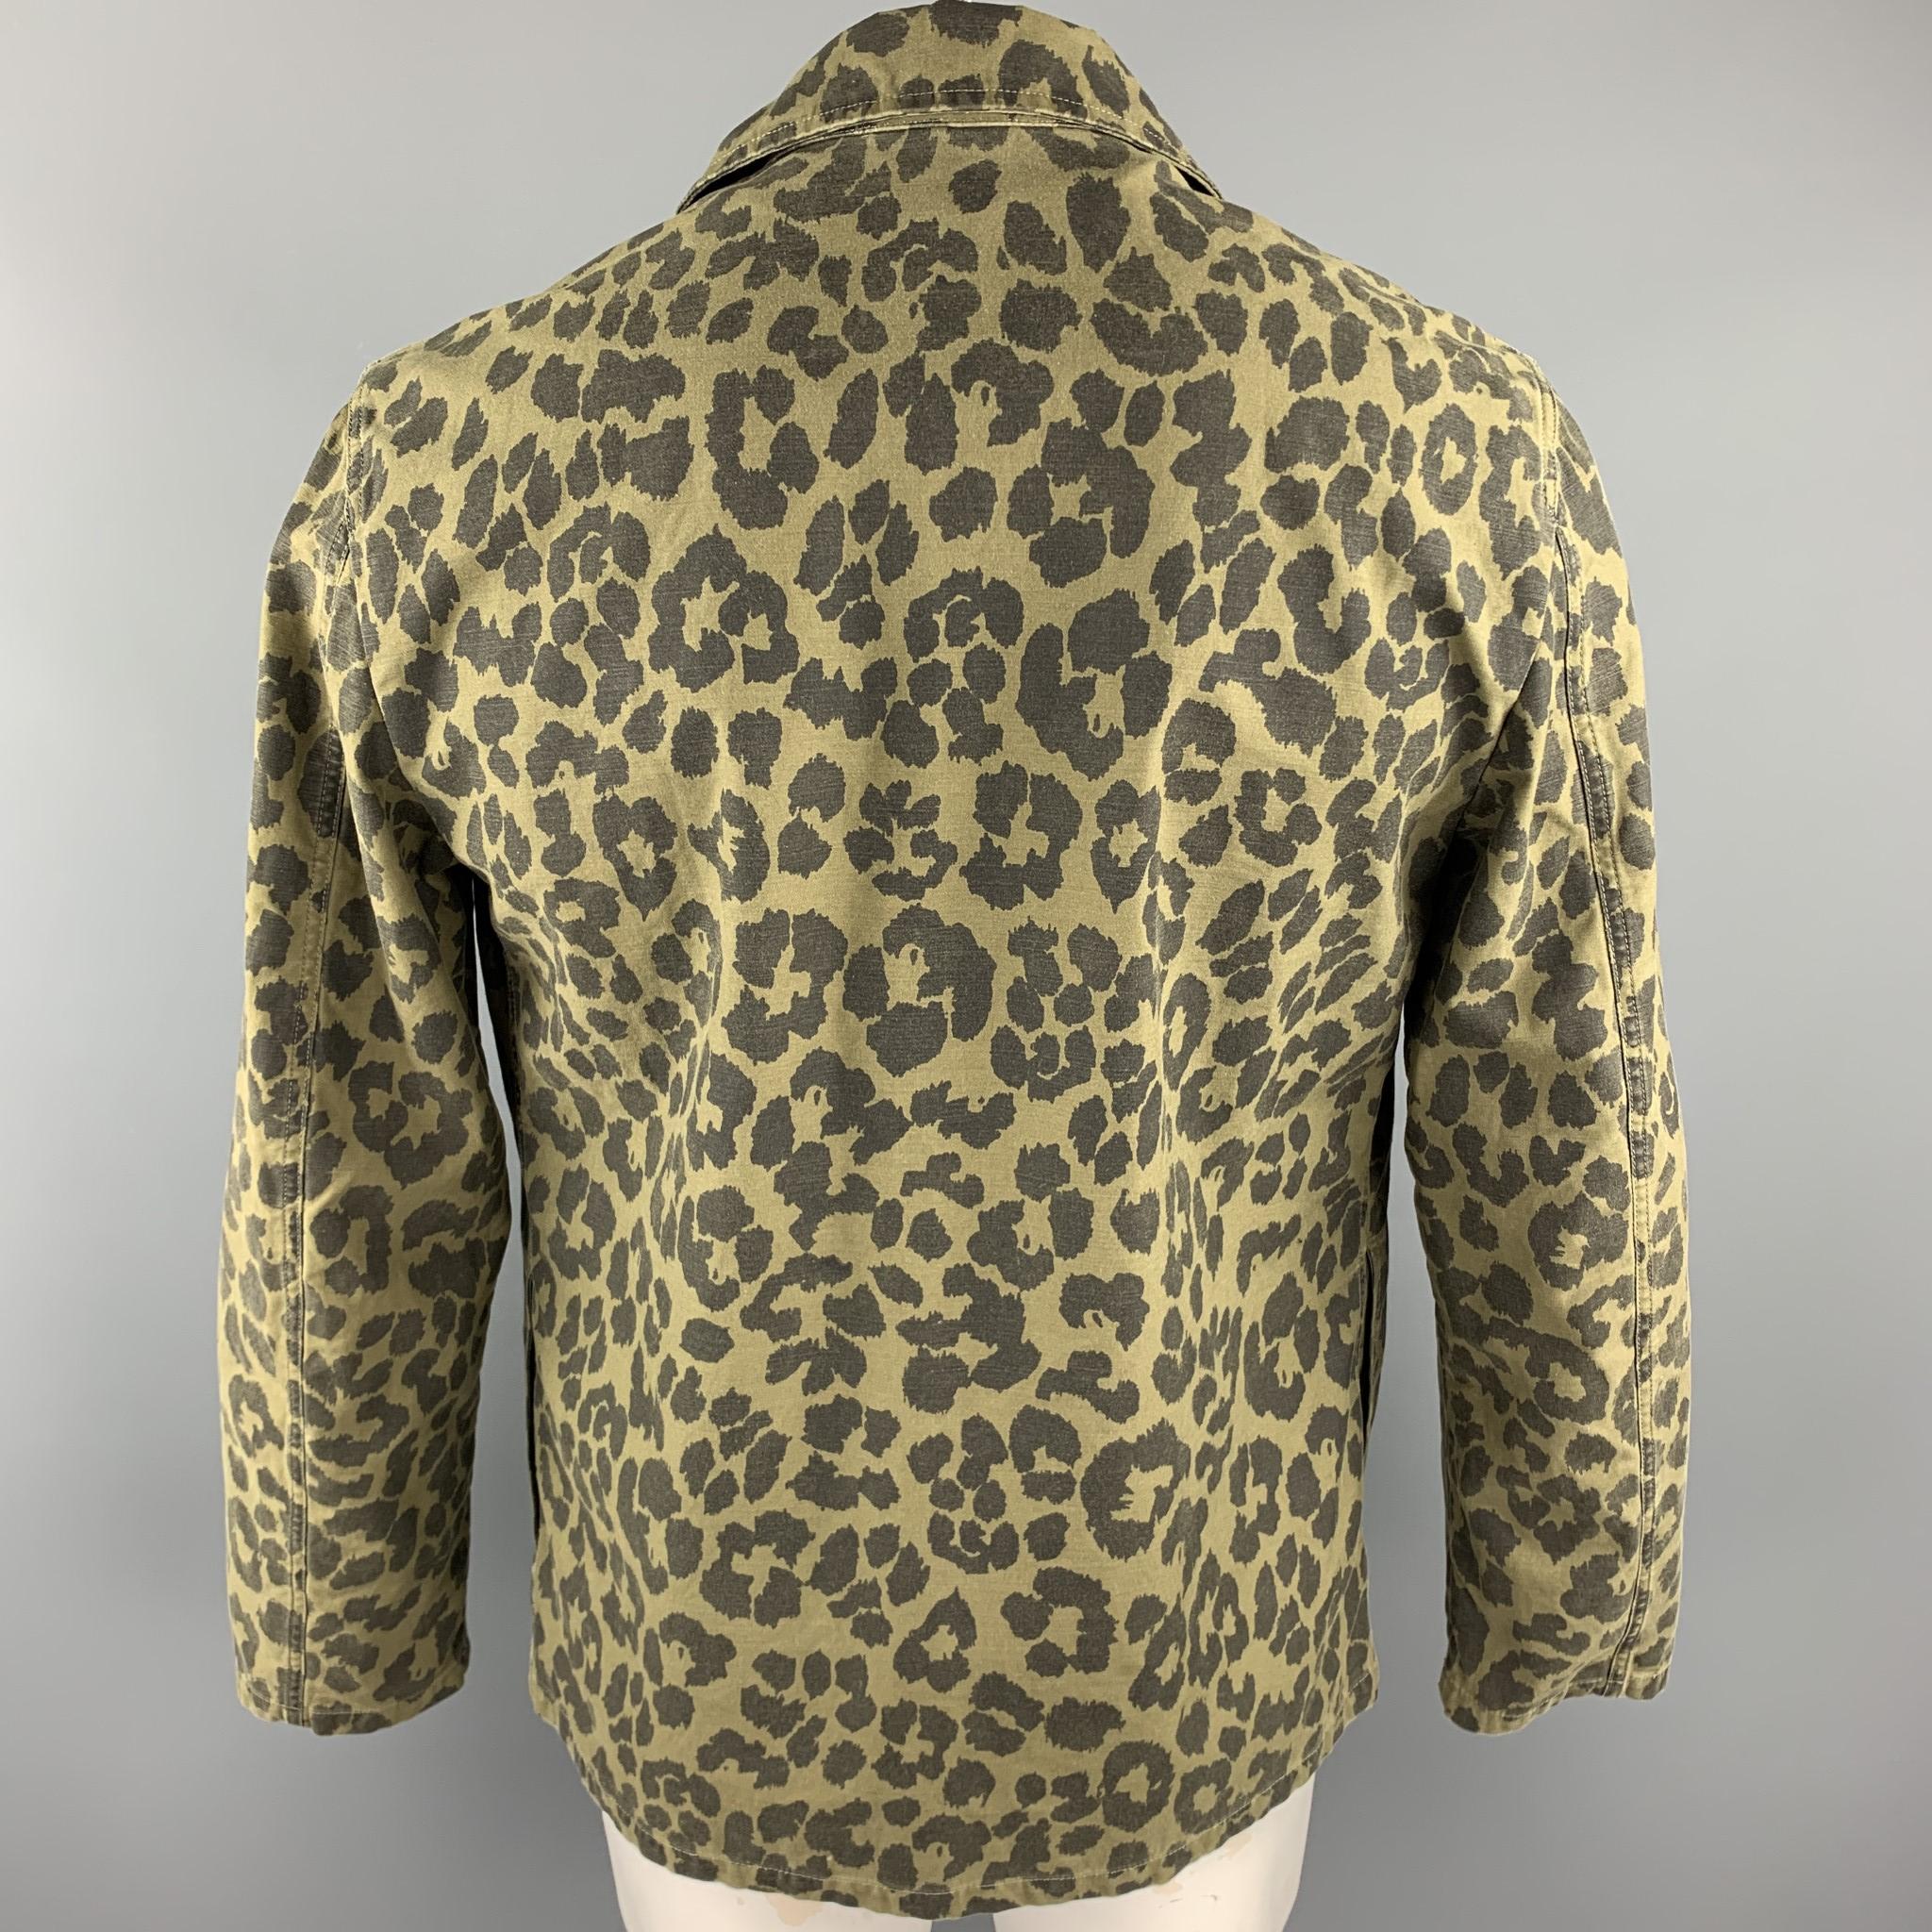 black leopard print jacket